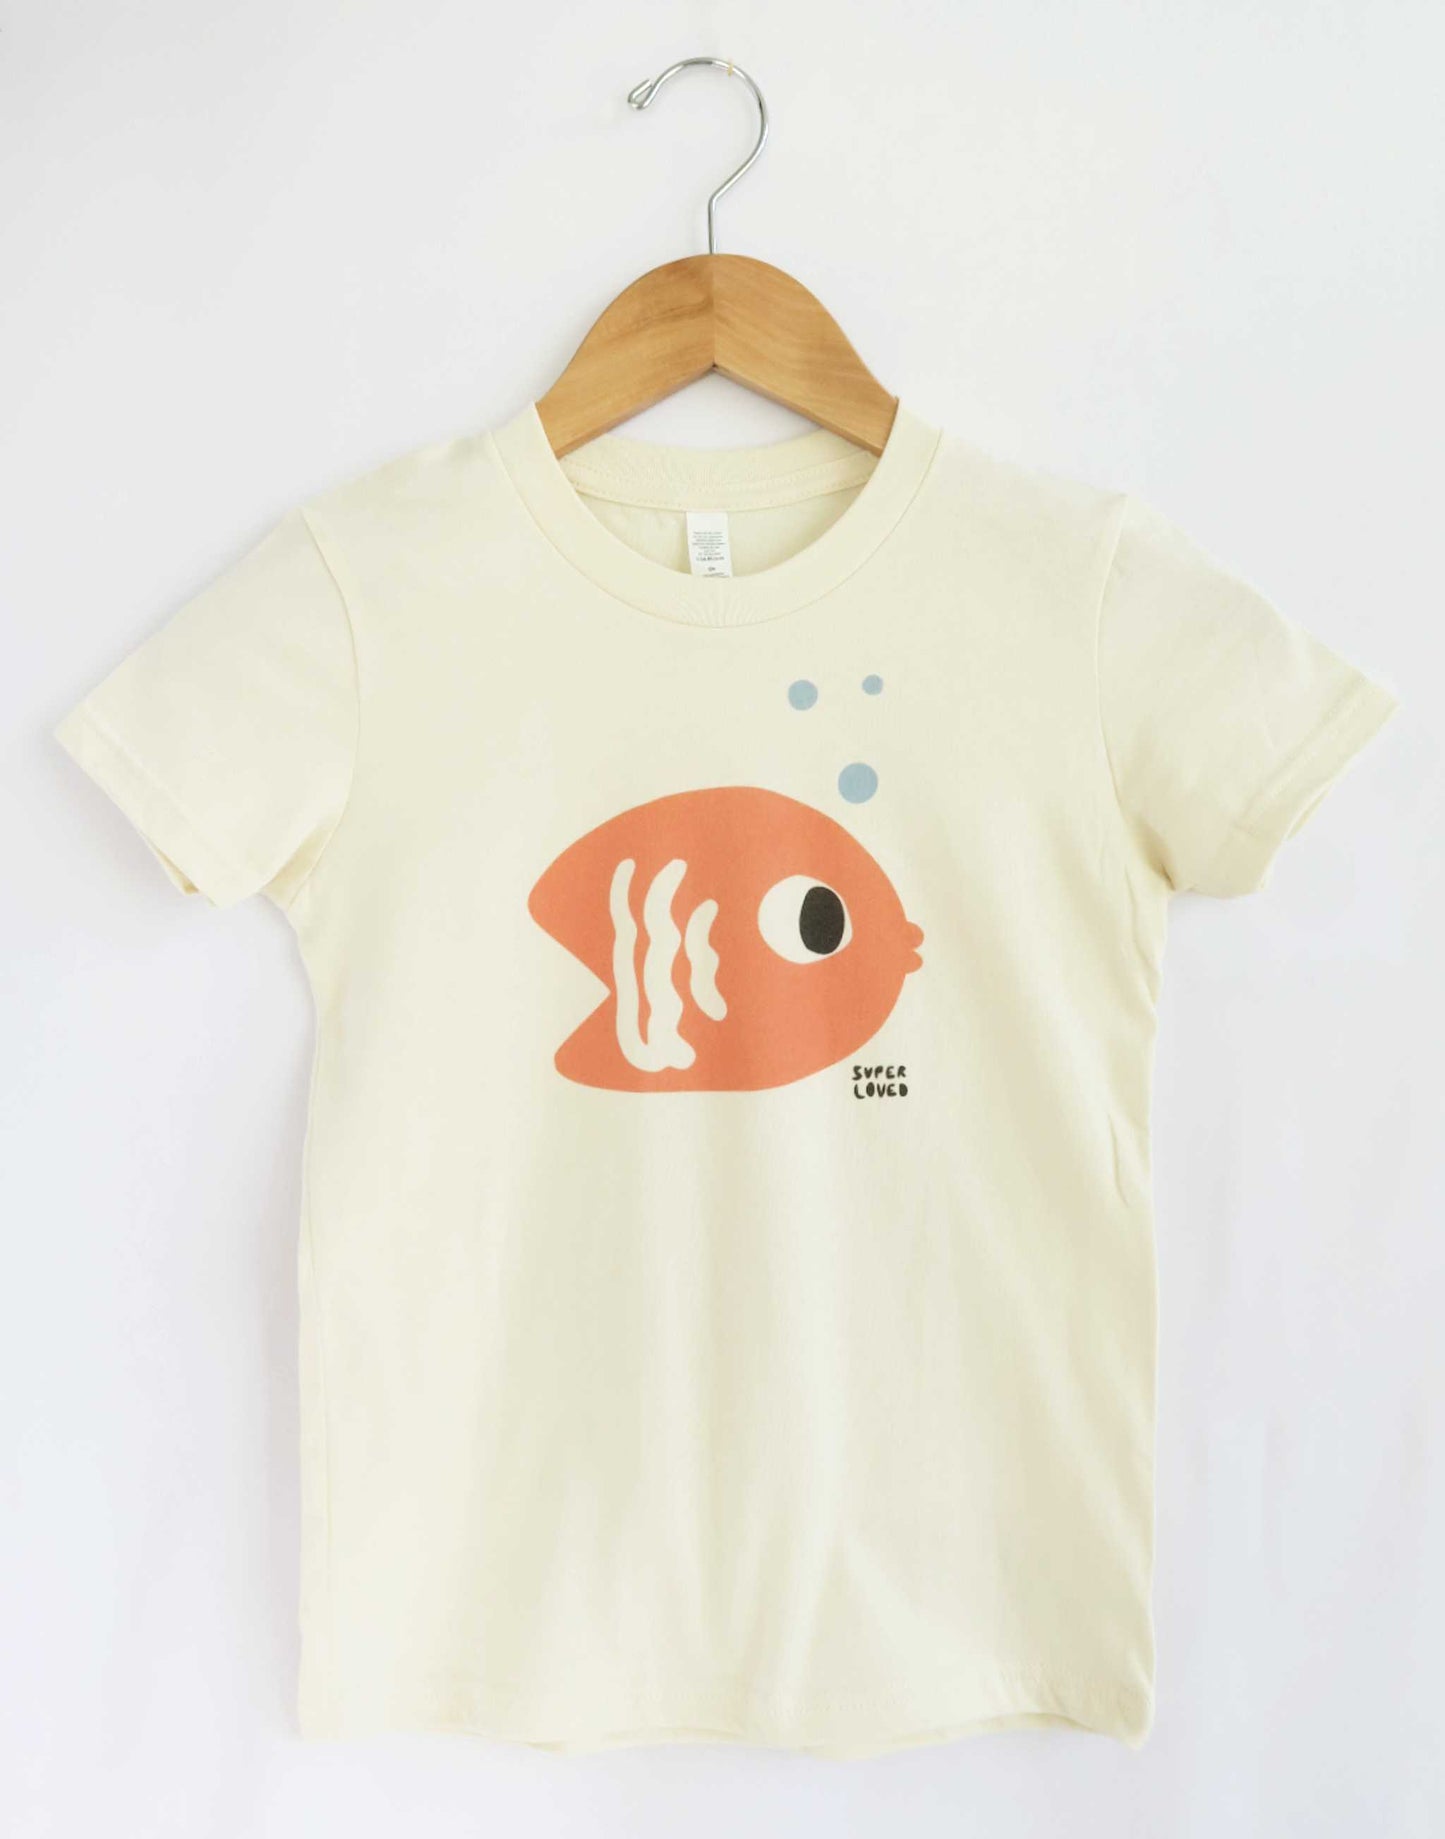 SUPER LOVED- Swimming Fish Kids T-Shirt